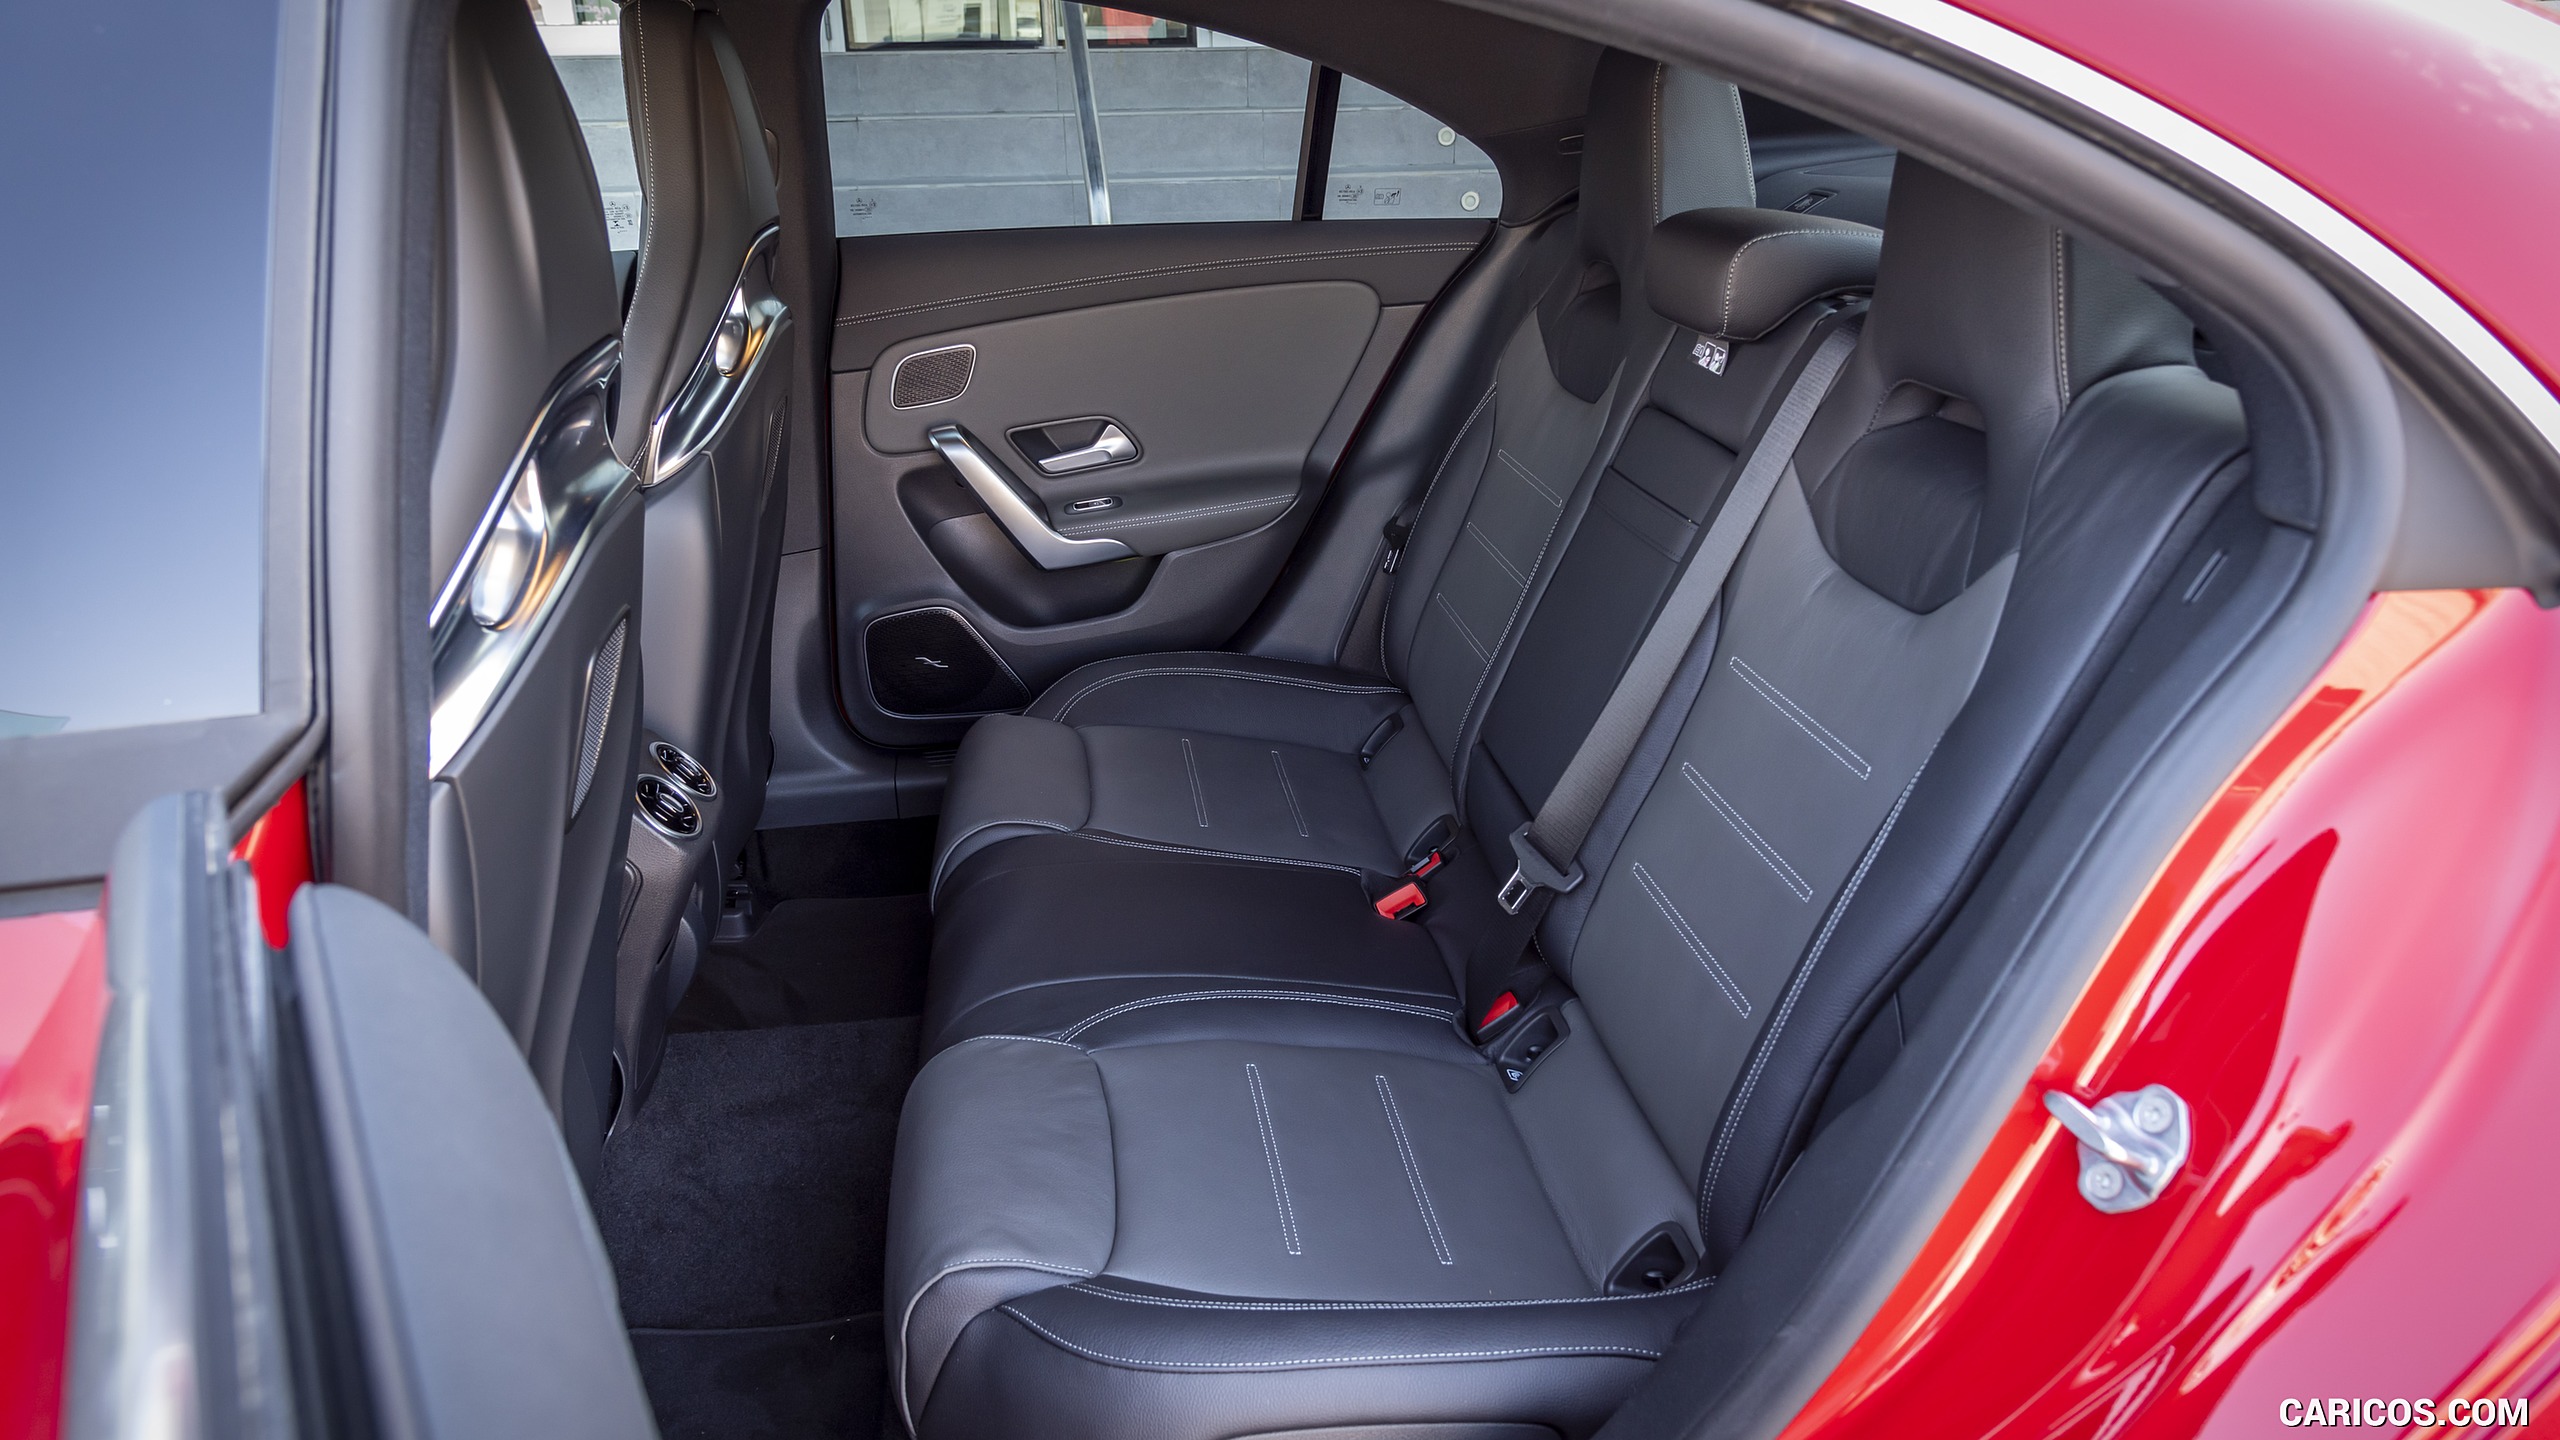 2020 Mercedes-AMG CLA 45 - Interior, Rear Seats, #50 of 159